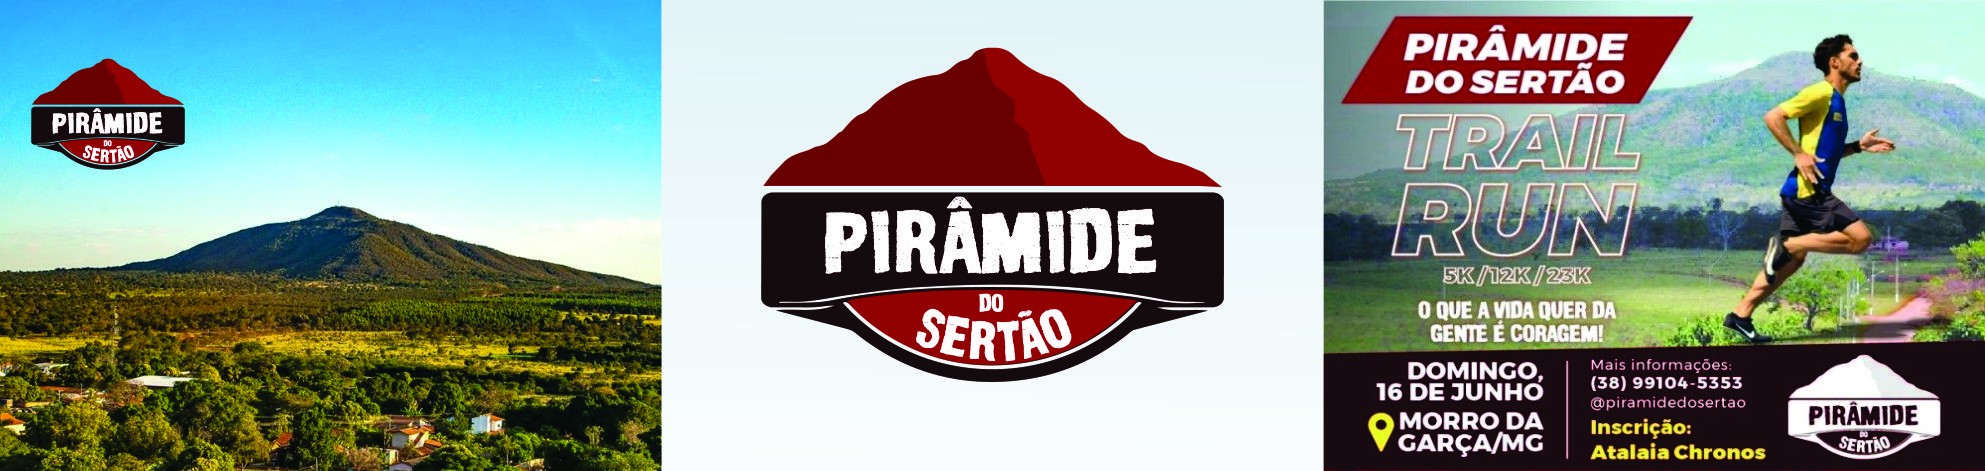 Pirâmide do Sertão